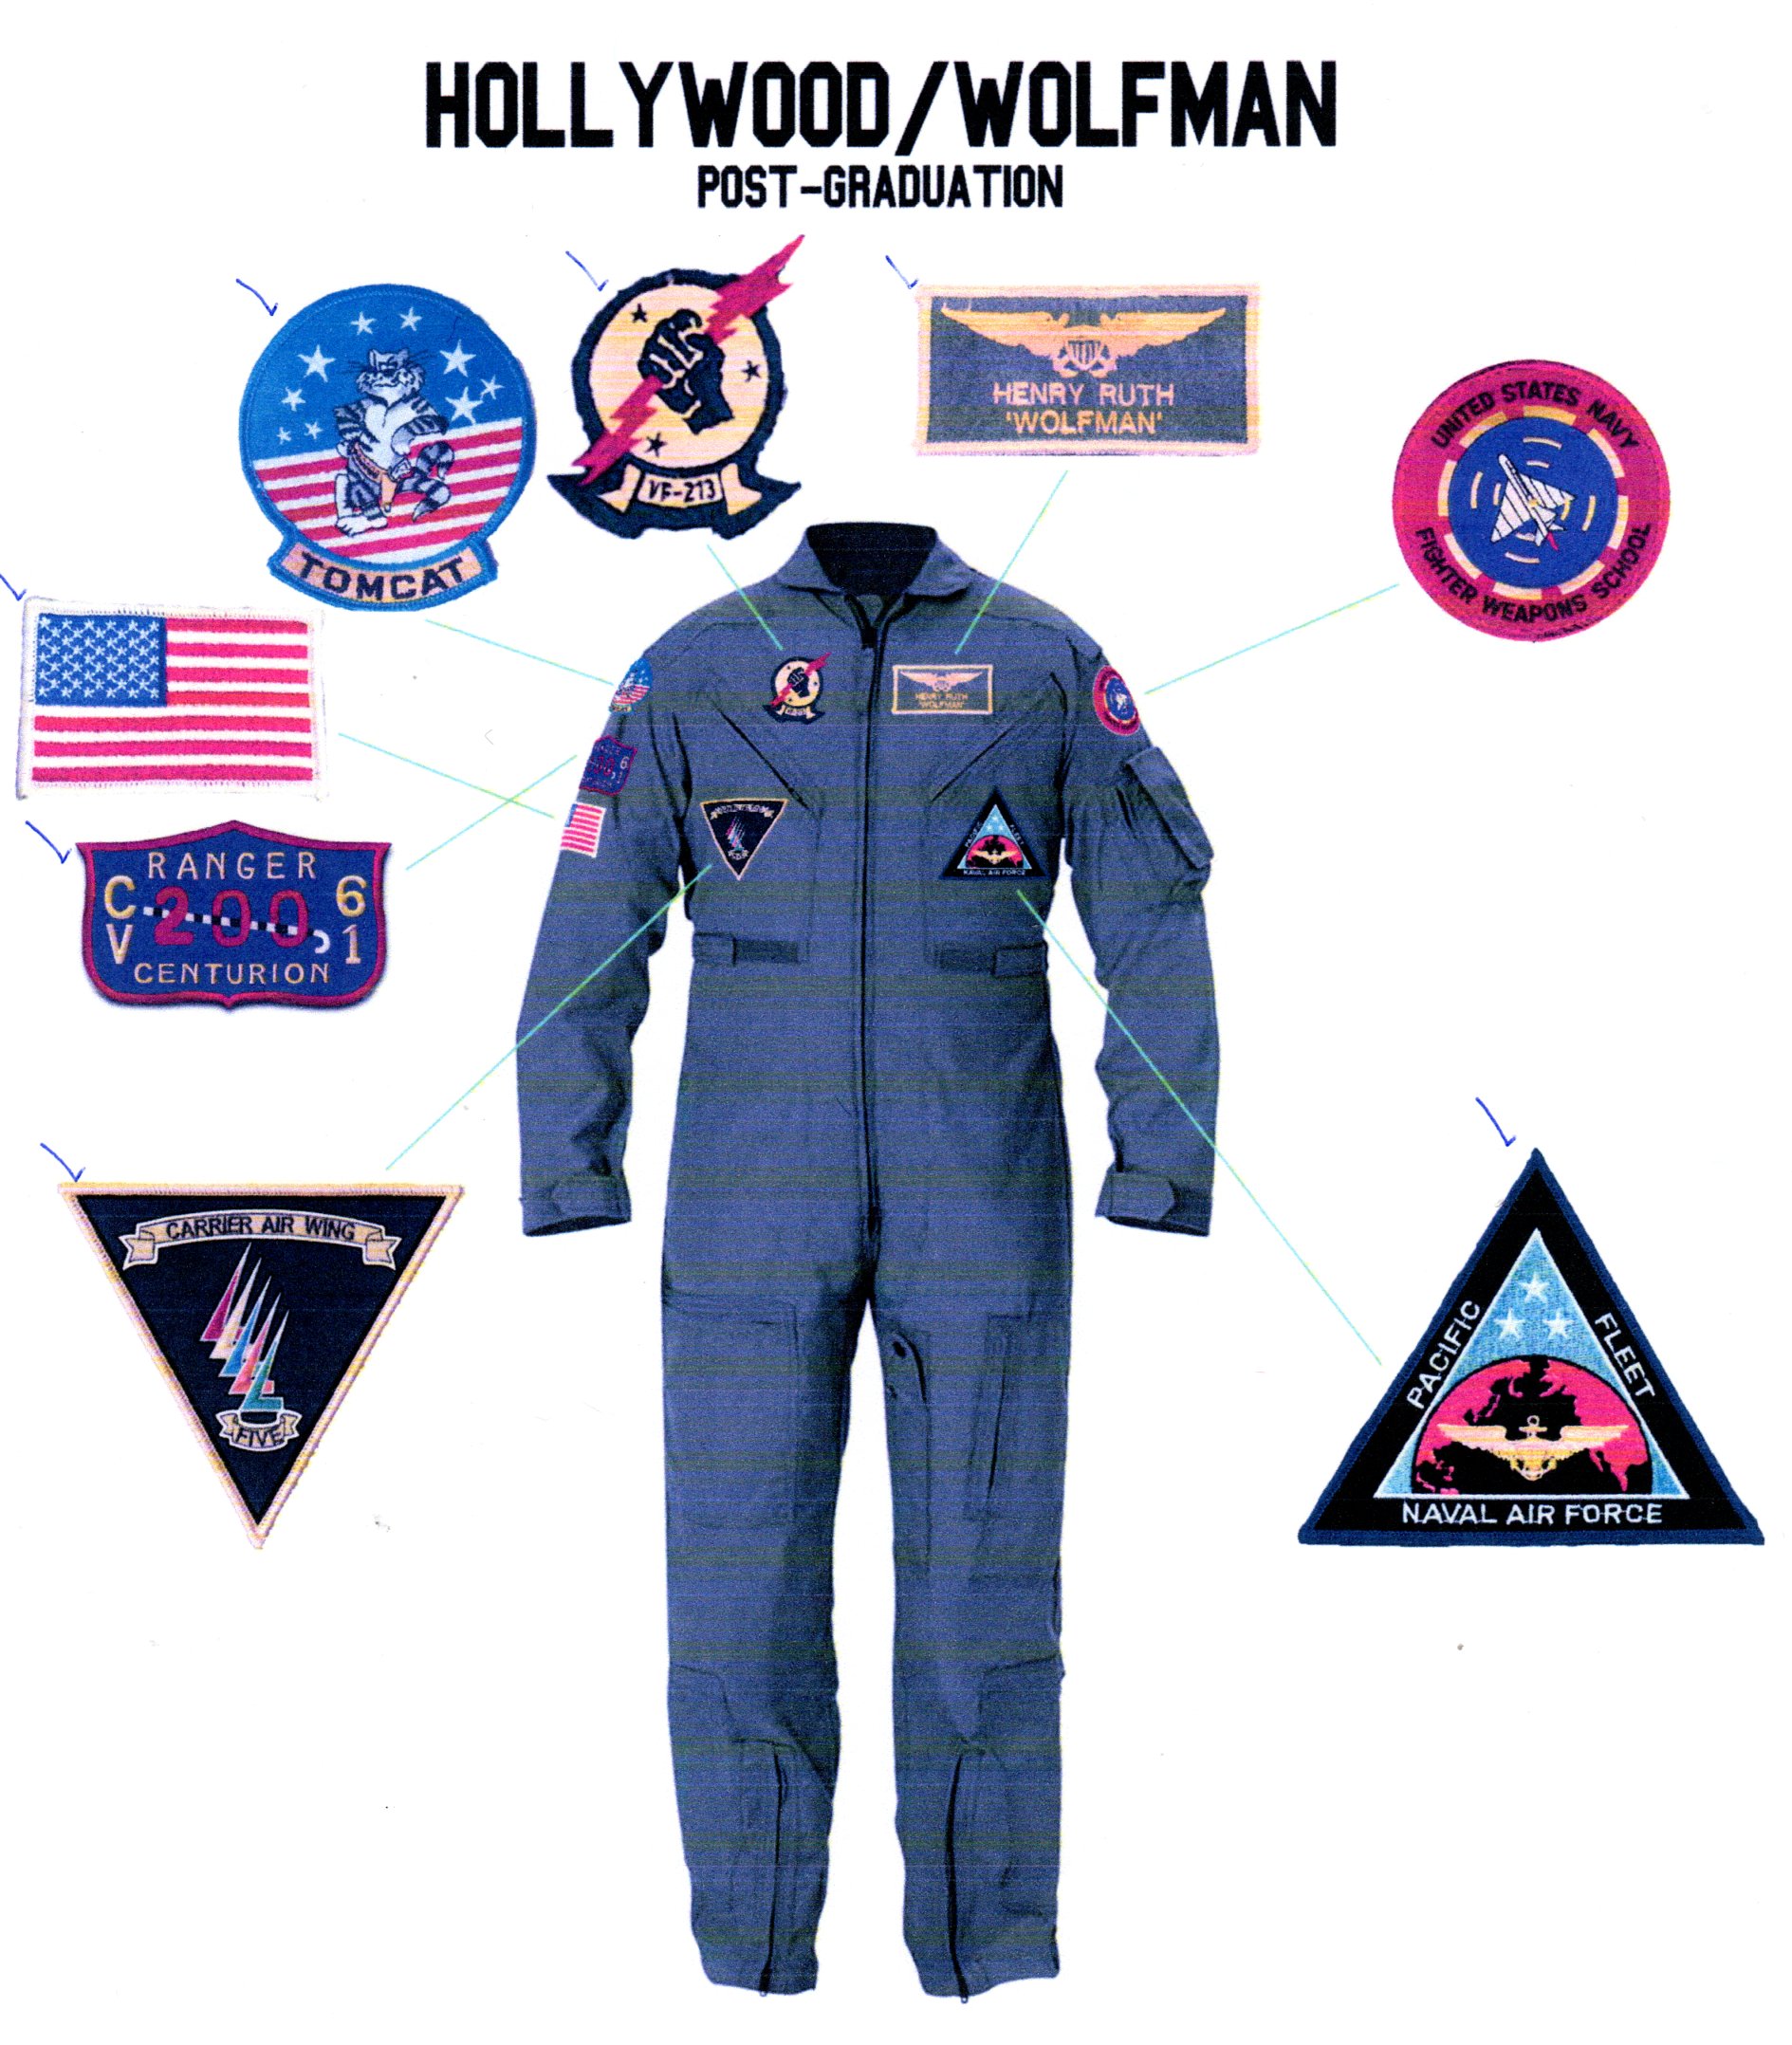 TOPGUN (1986): HOLLYWOOD's 'Post-Graduation' Flight Suit